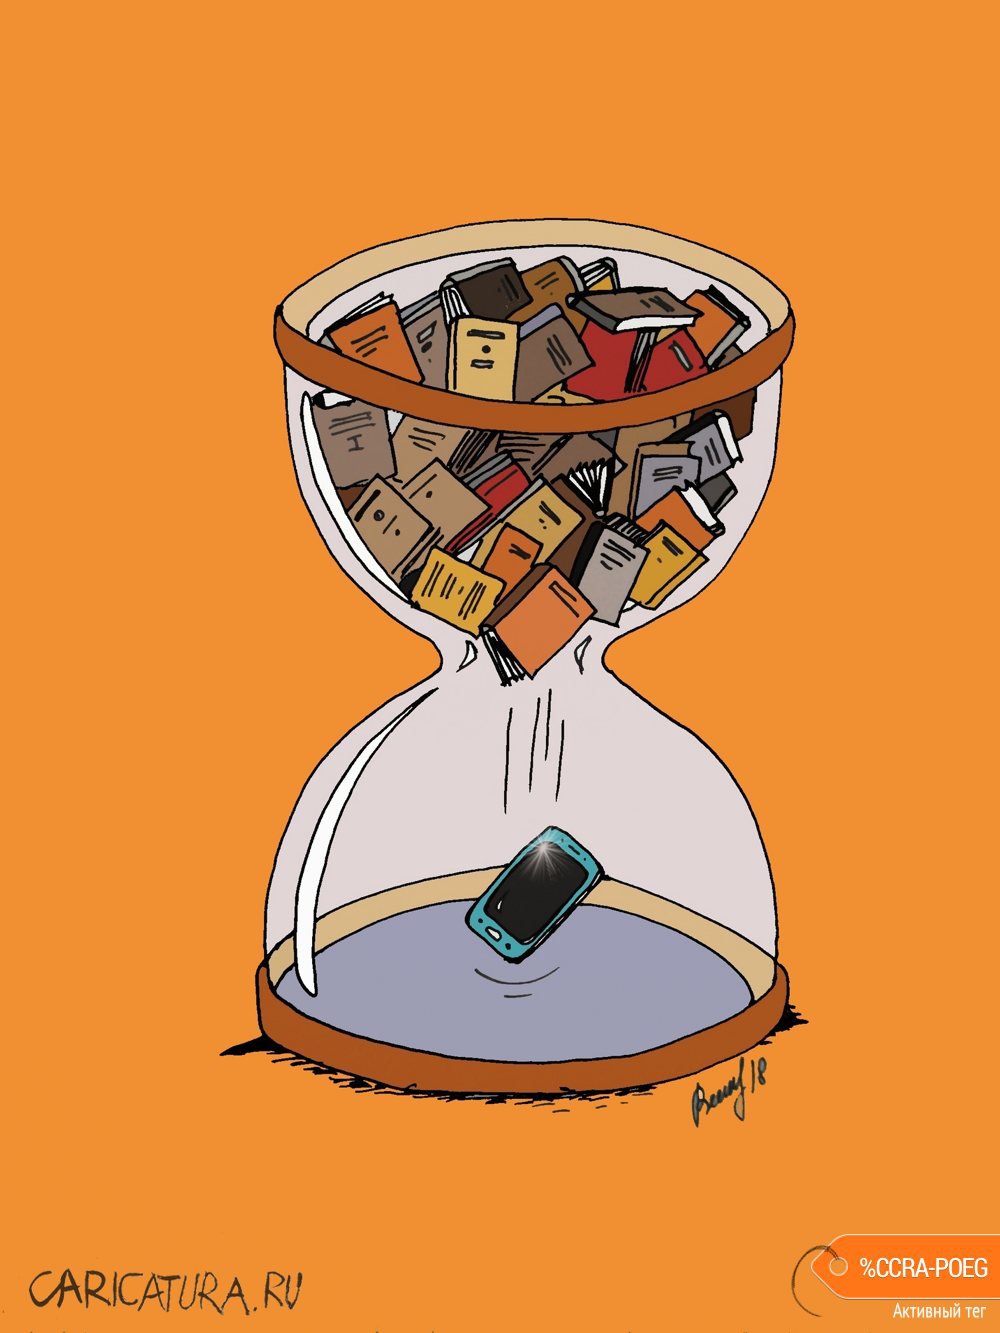 Карикатура "Времечко...", Юрий Величко